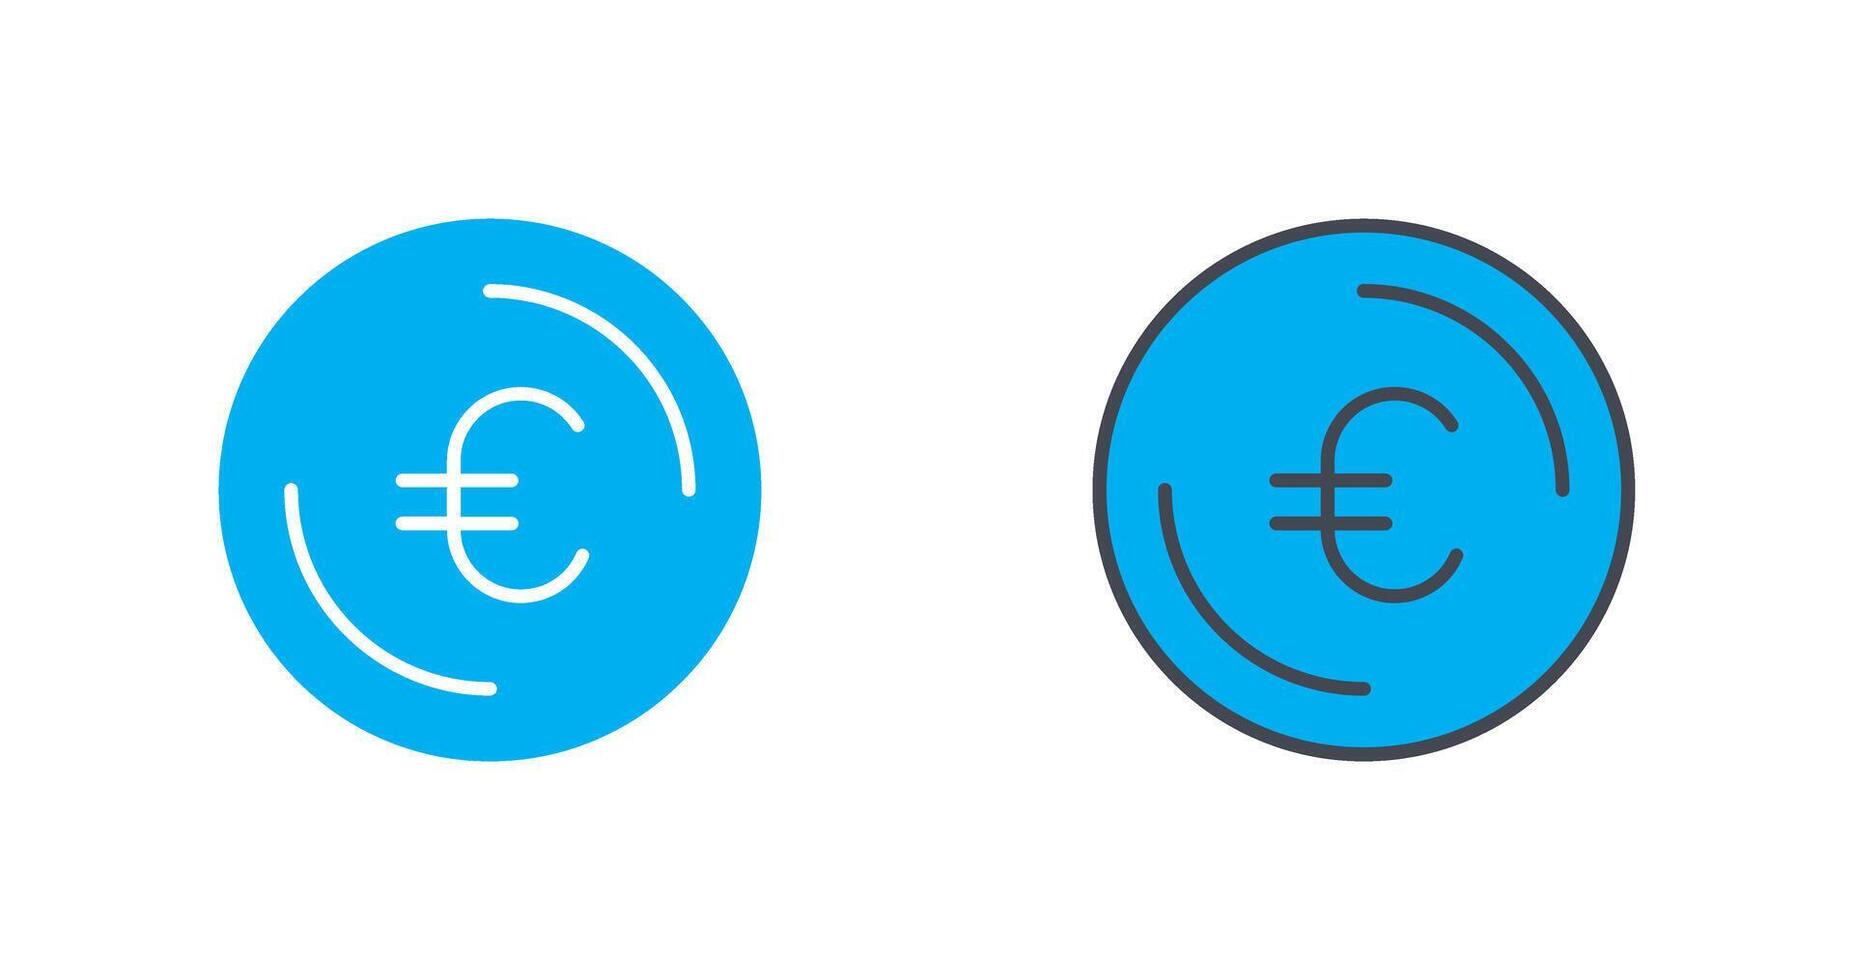 Euro Symbol Icon Design vector